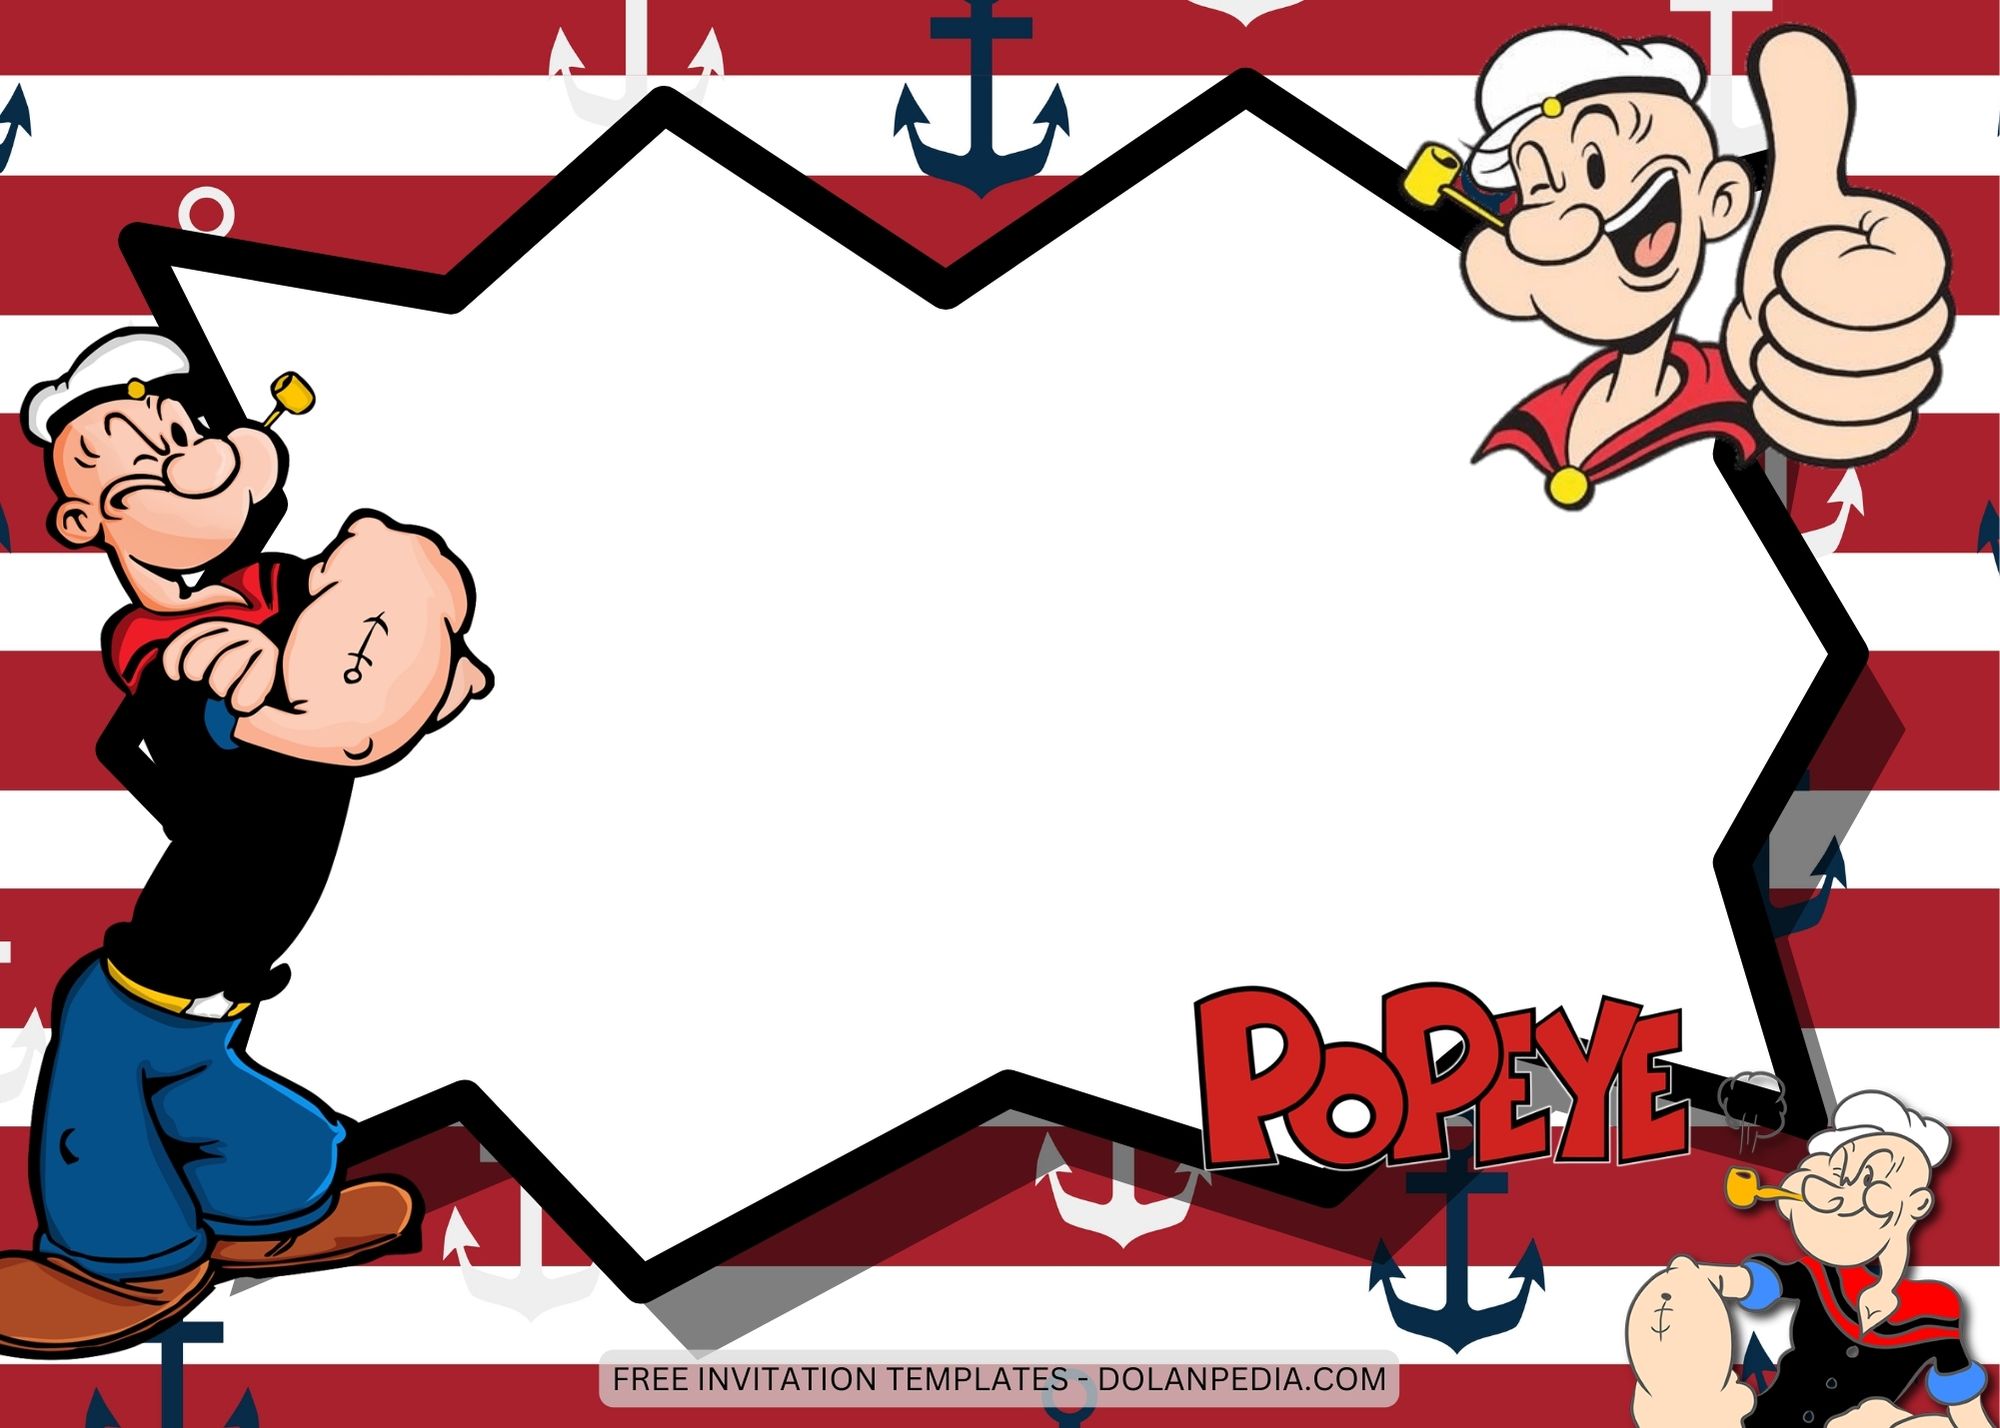 Blank Popeye The Sailor Man Birthday Invitation Templates One